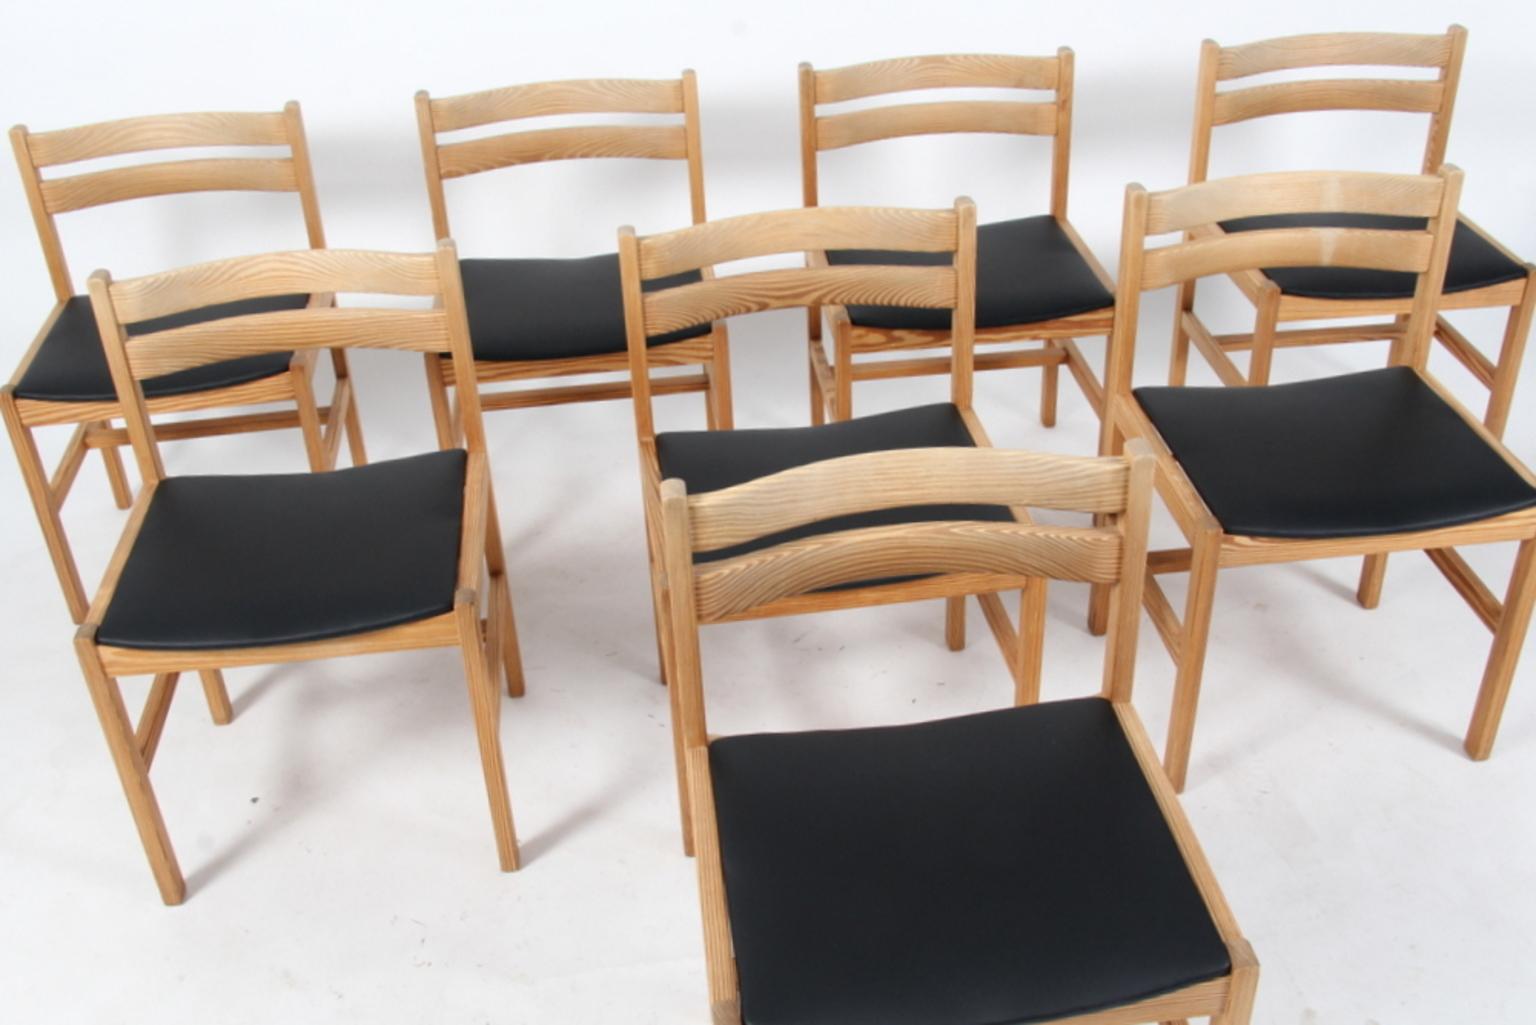 Børge Mogensen eight dining chairs new upholstered with black aniline leather.

Frame in solid oregone pine.

Model Asserbo, made by Karl Andersson & Söner, Huskvarna, Sweden.